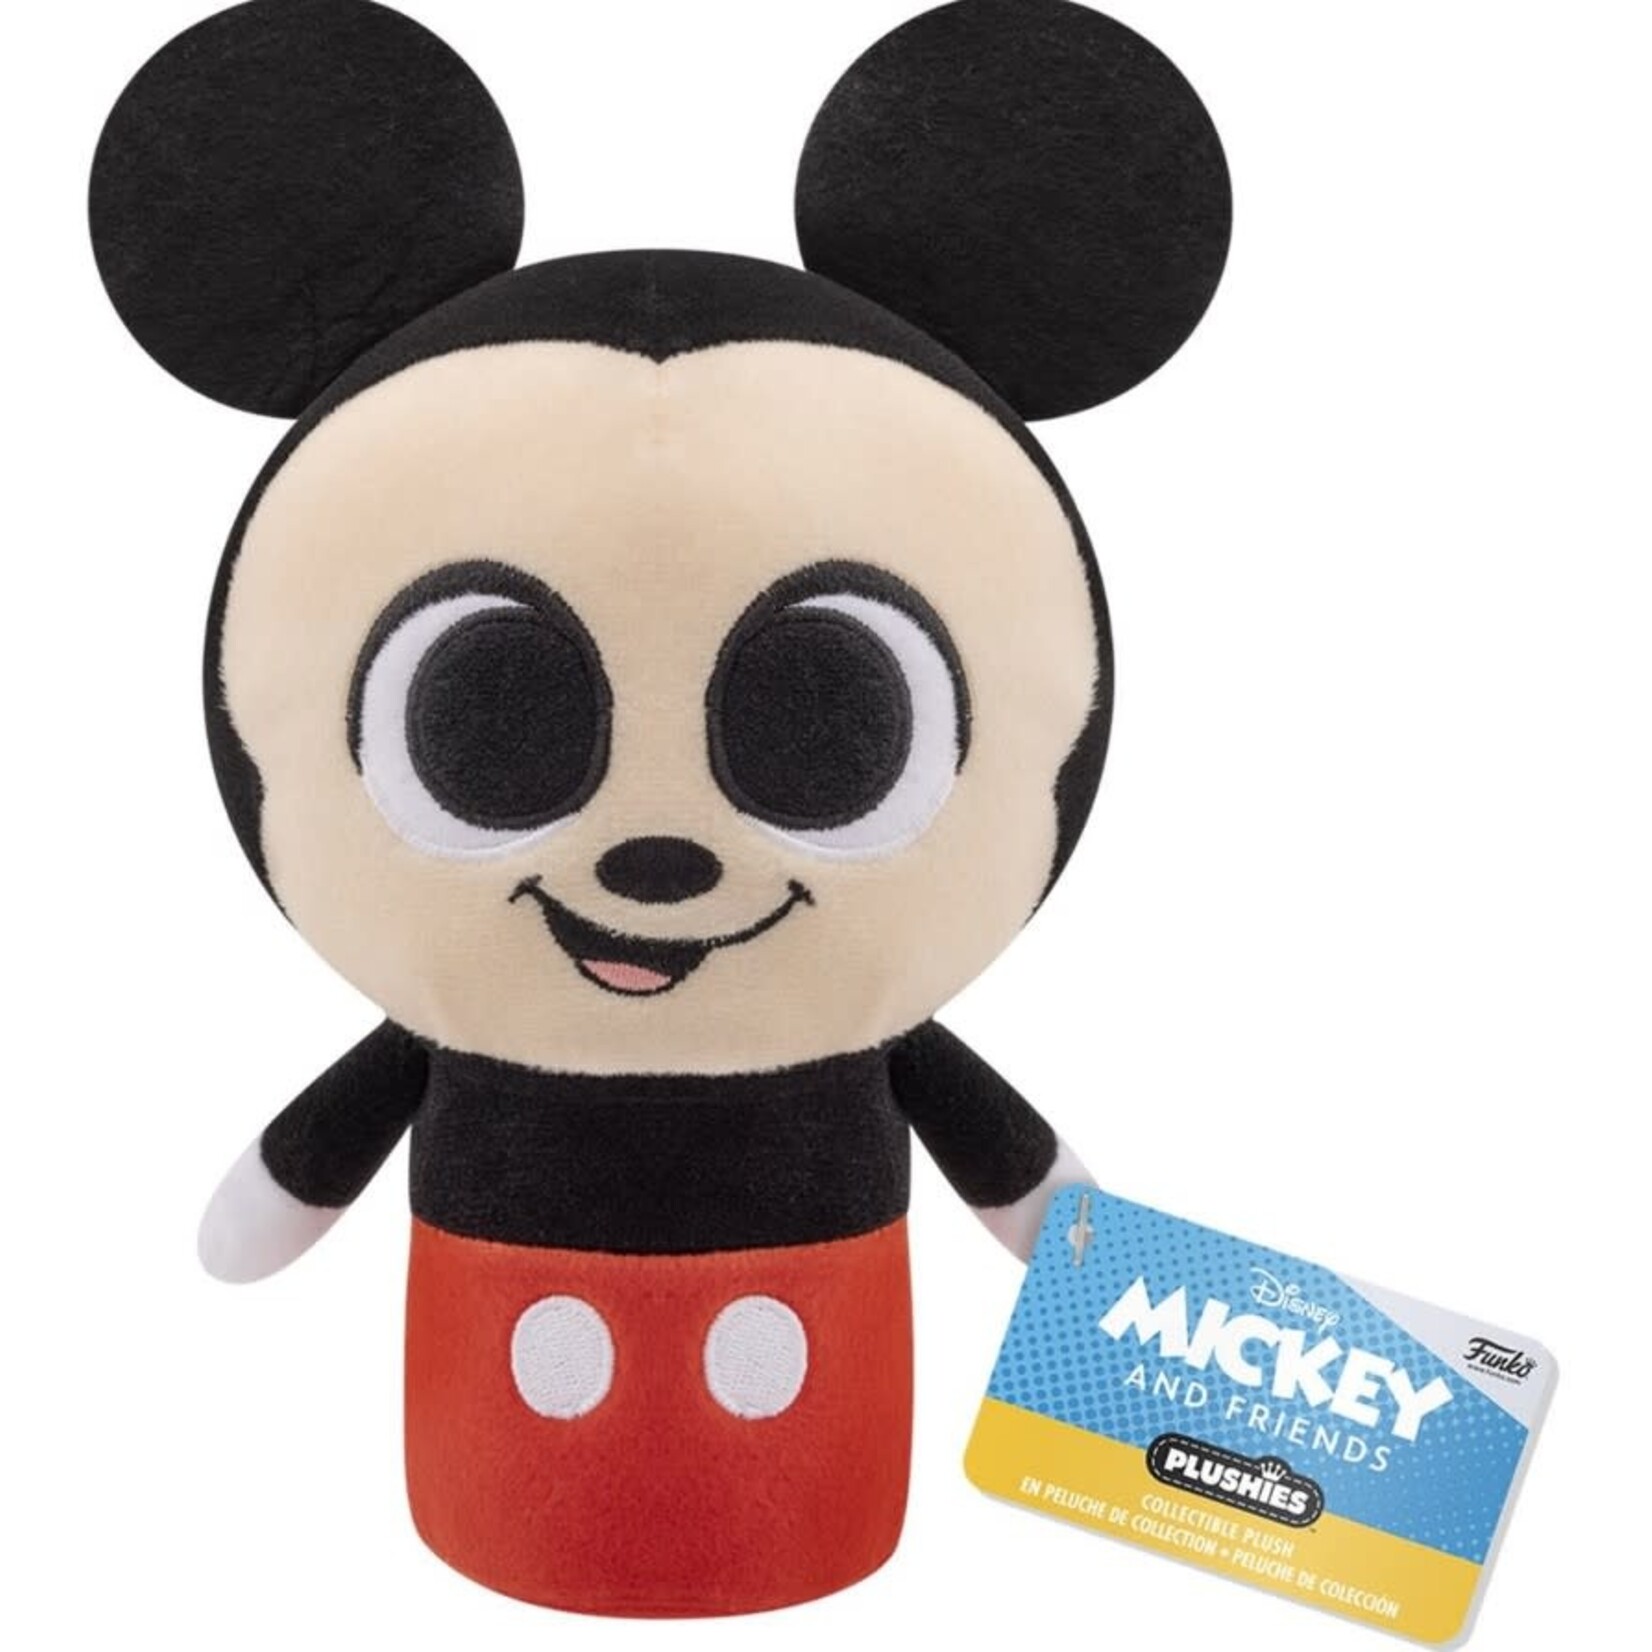 Disney Disney Classics - Mickey Mouse Pop! Plush